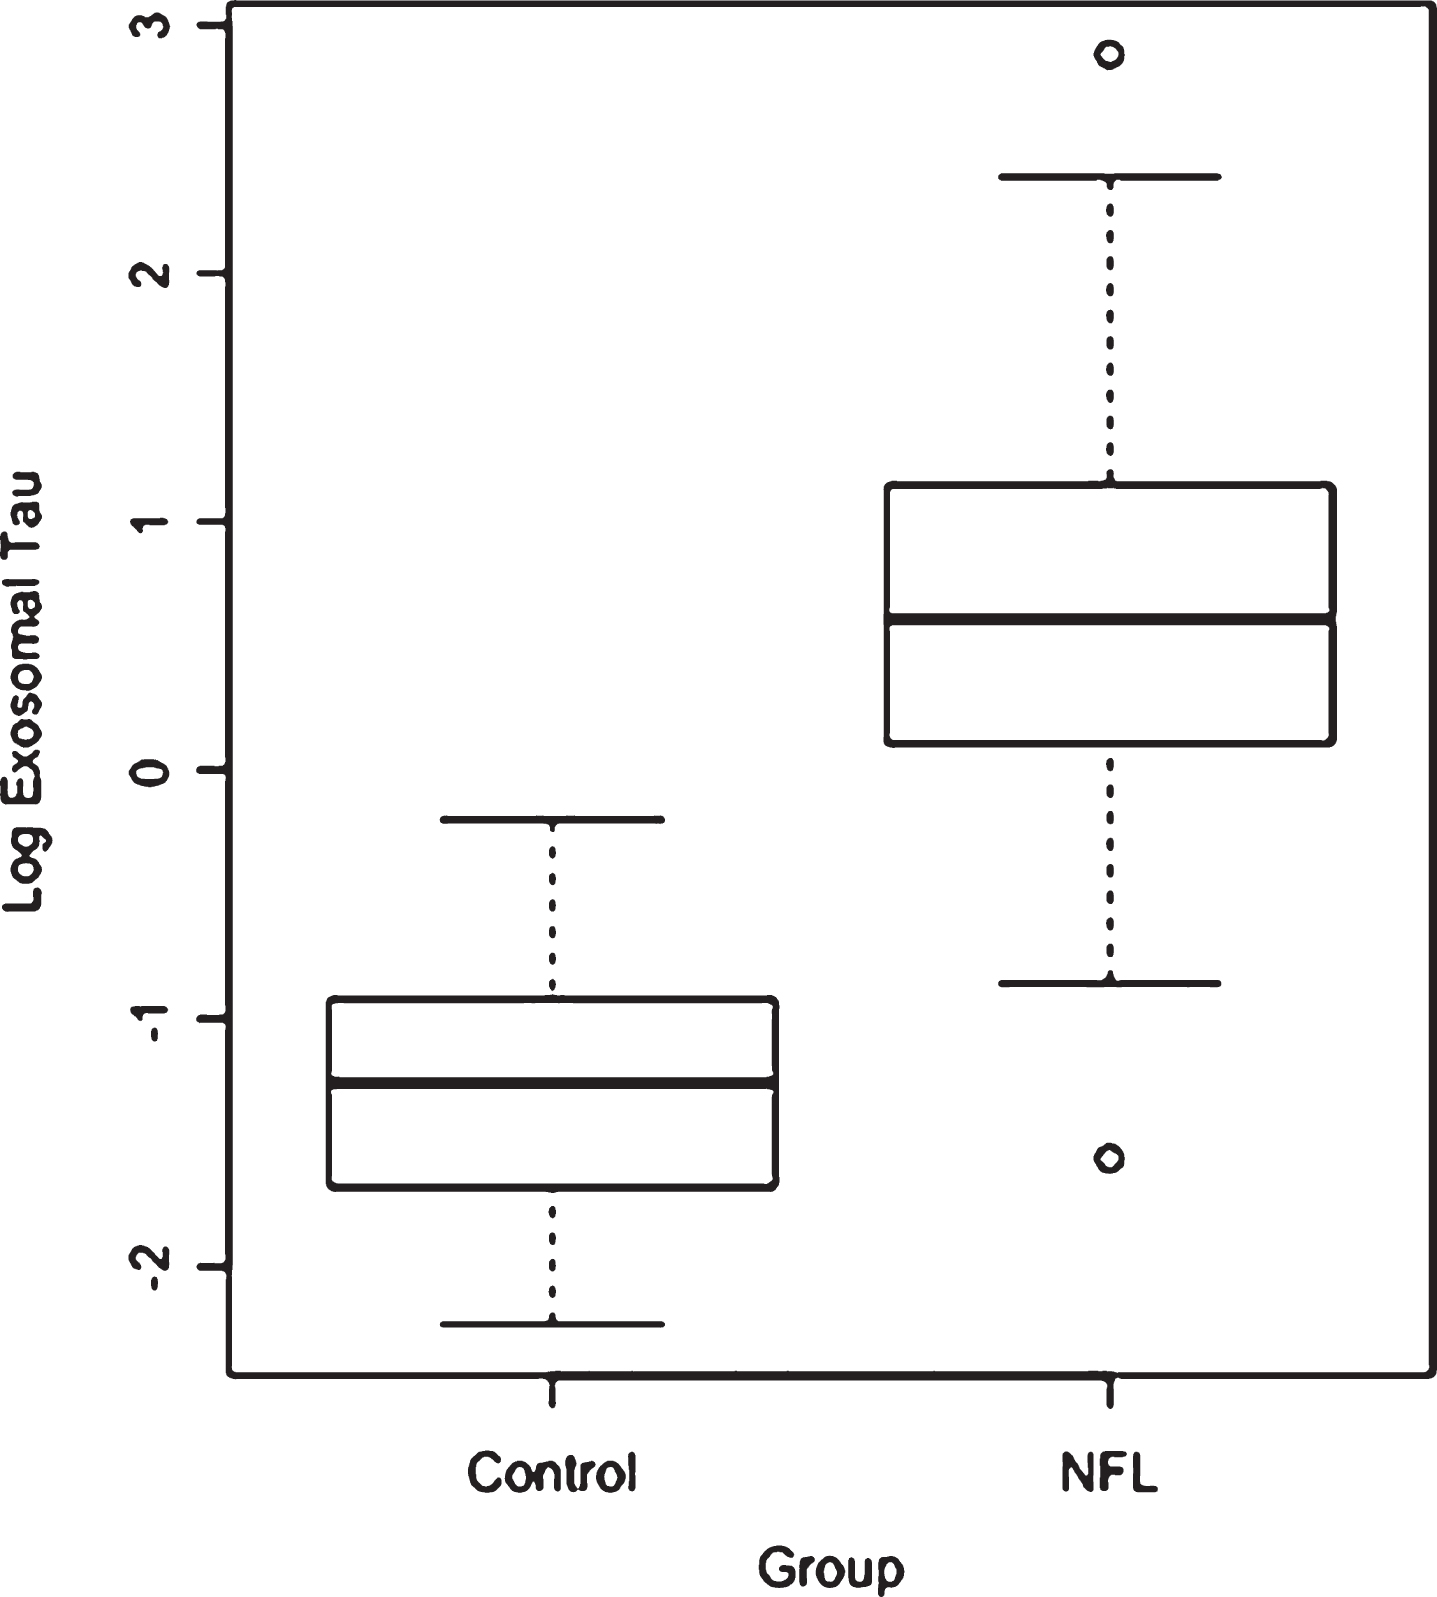 Unadjusted distribution of plasma exosomal tau between Control and NFL groups.